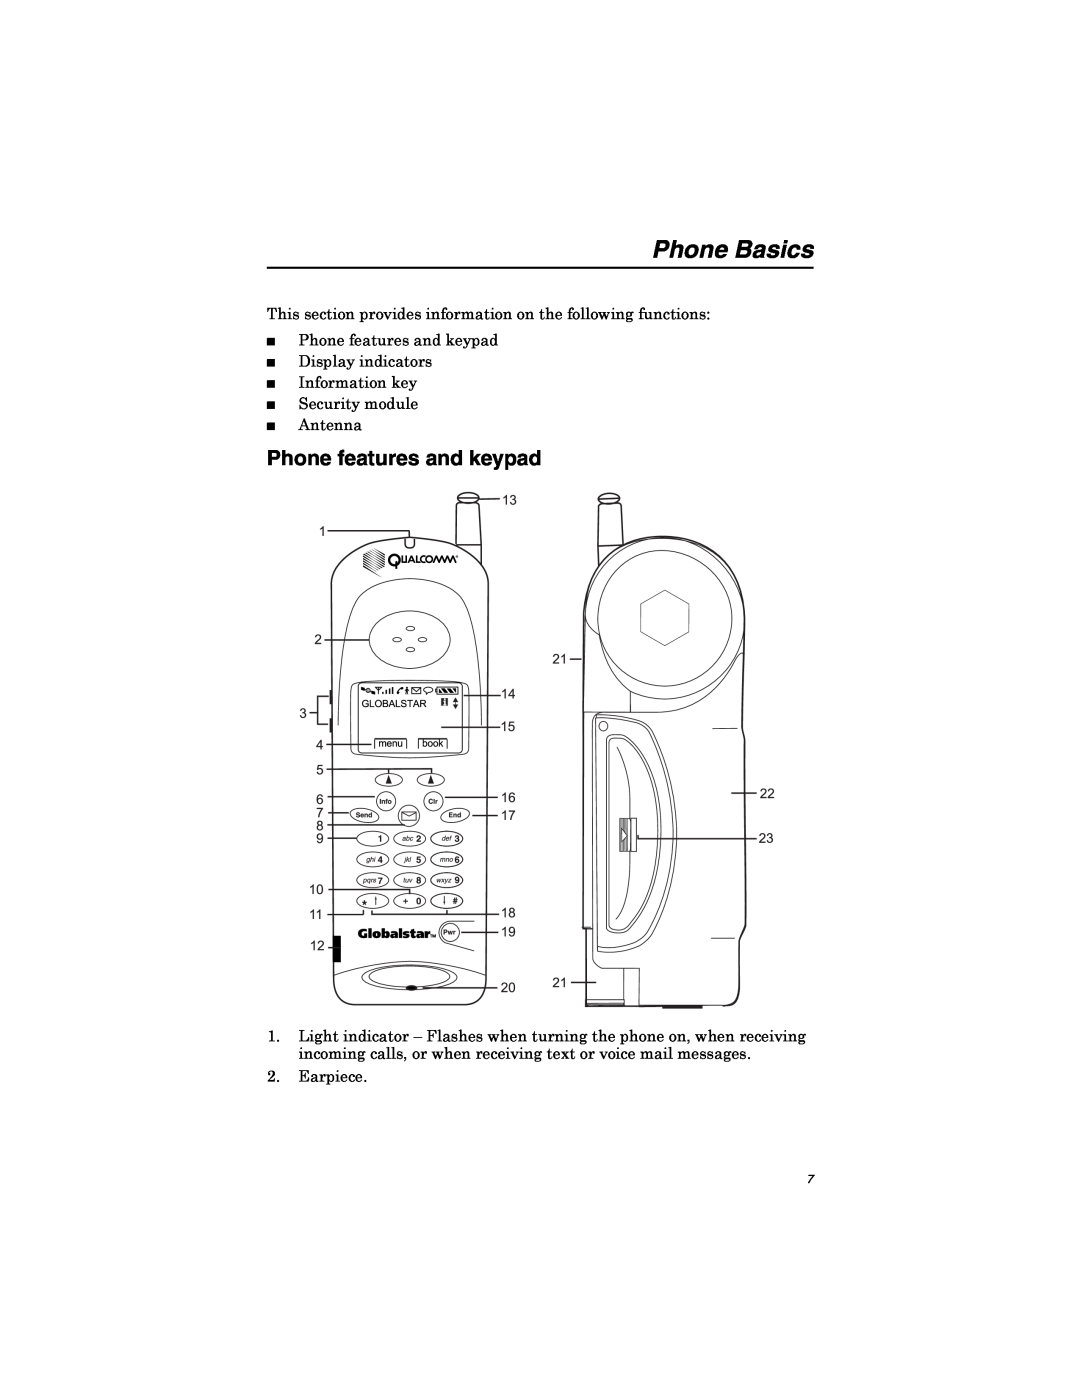 Qualcomm GSP-1600 manual Phone Basics, Phone features and keypad, $Qwhqqd, Duslhfh 